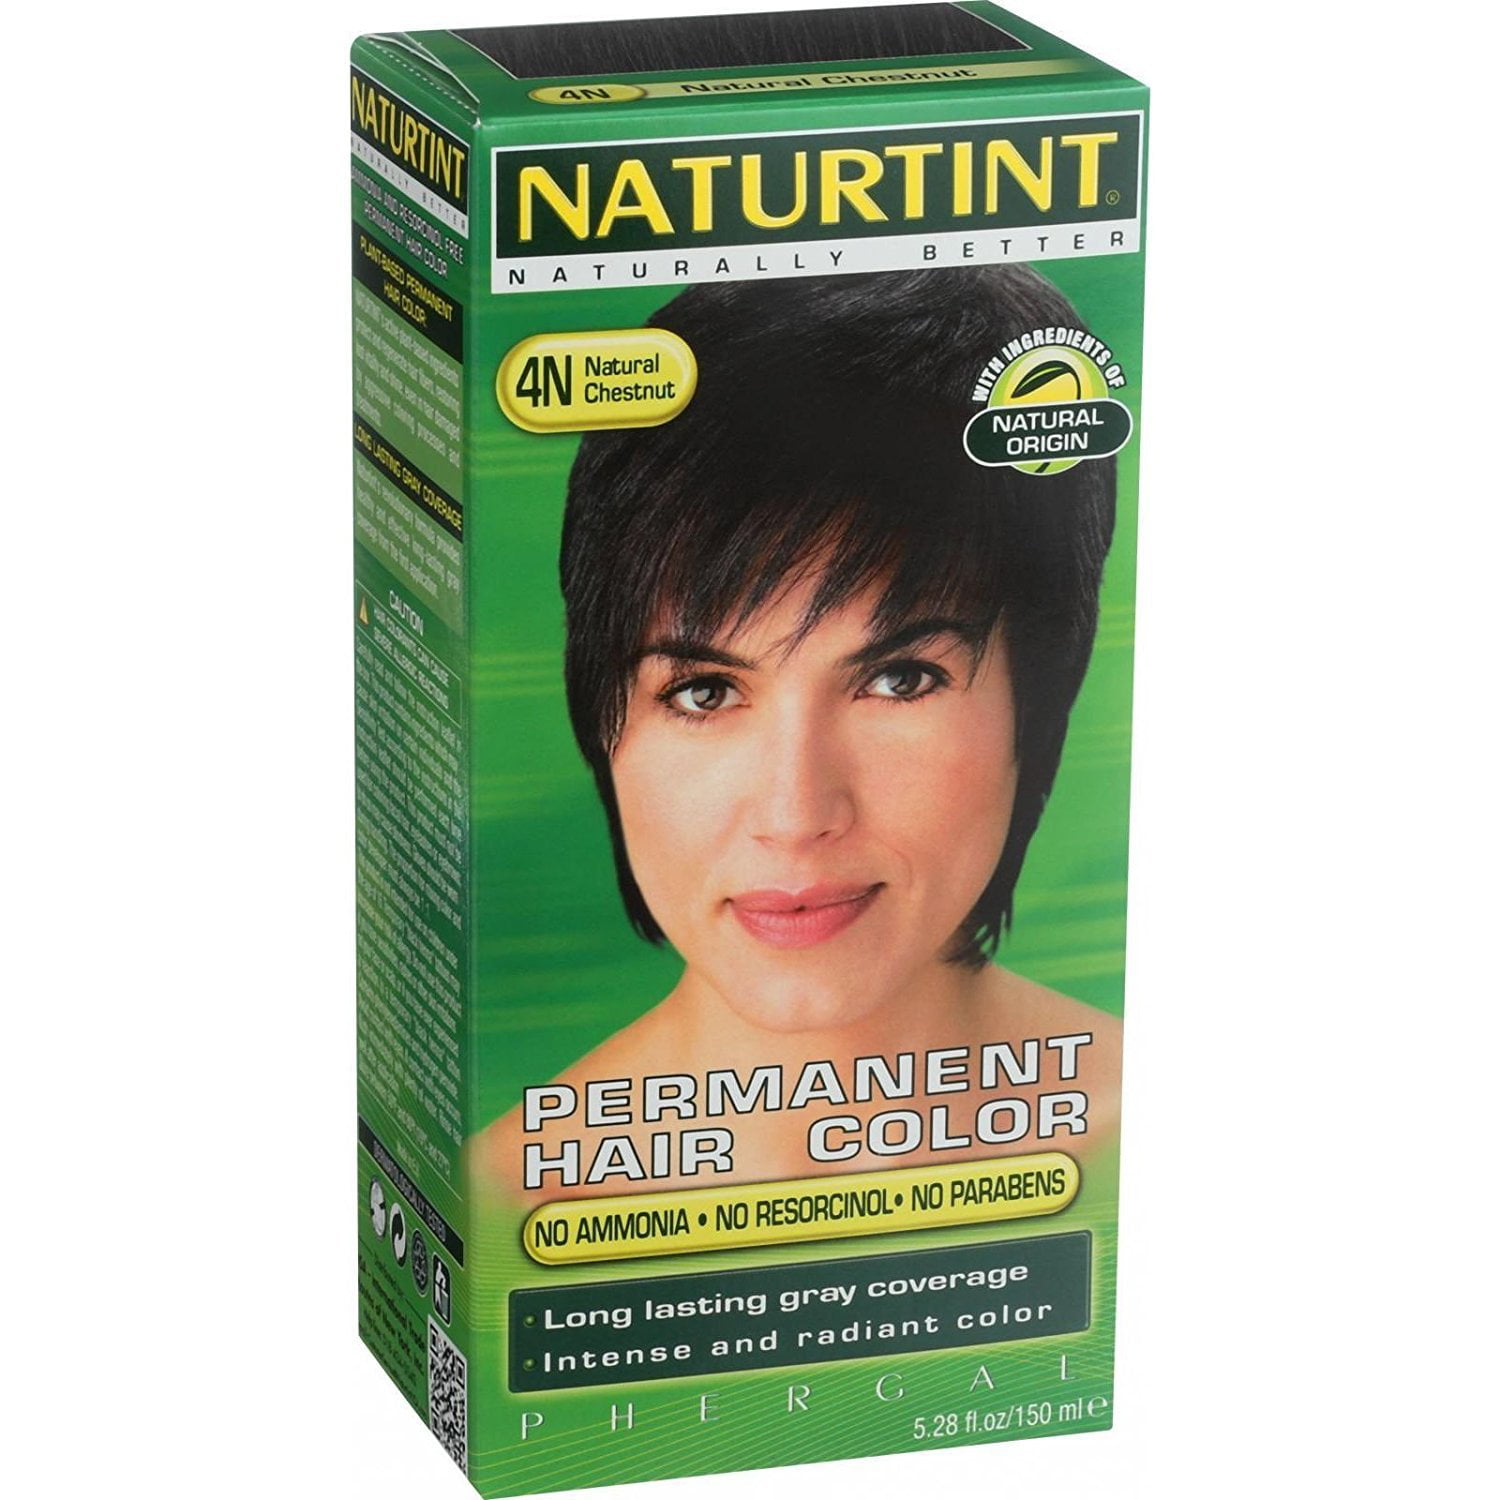 Naturtint Hair Color - Permanent - 4N - Natural Chestnut - No Ammonia ﾂｷ No  Resorcinol ﾂｷ No Parabens  oz (Pack of 4) 